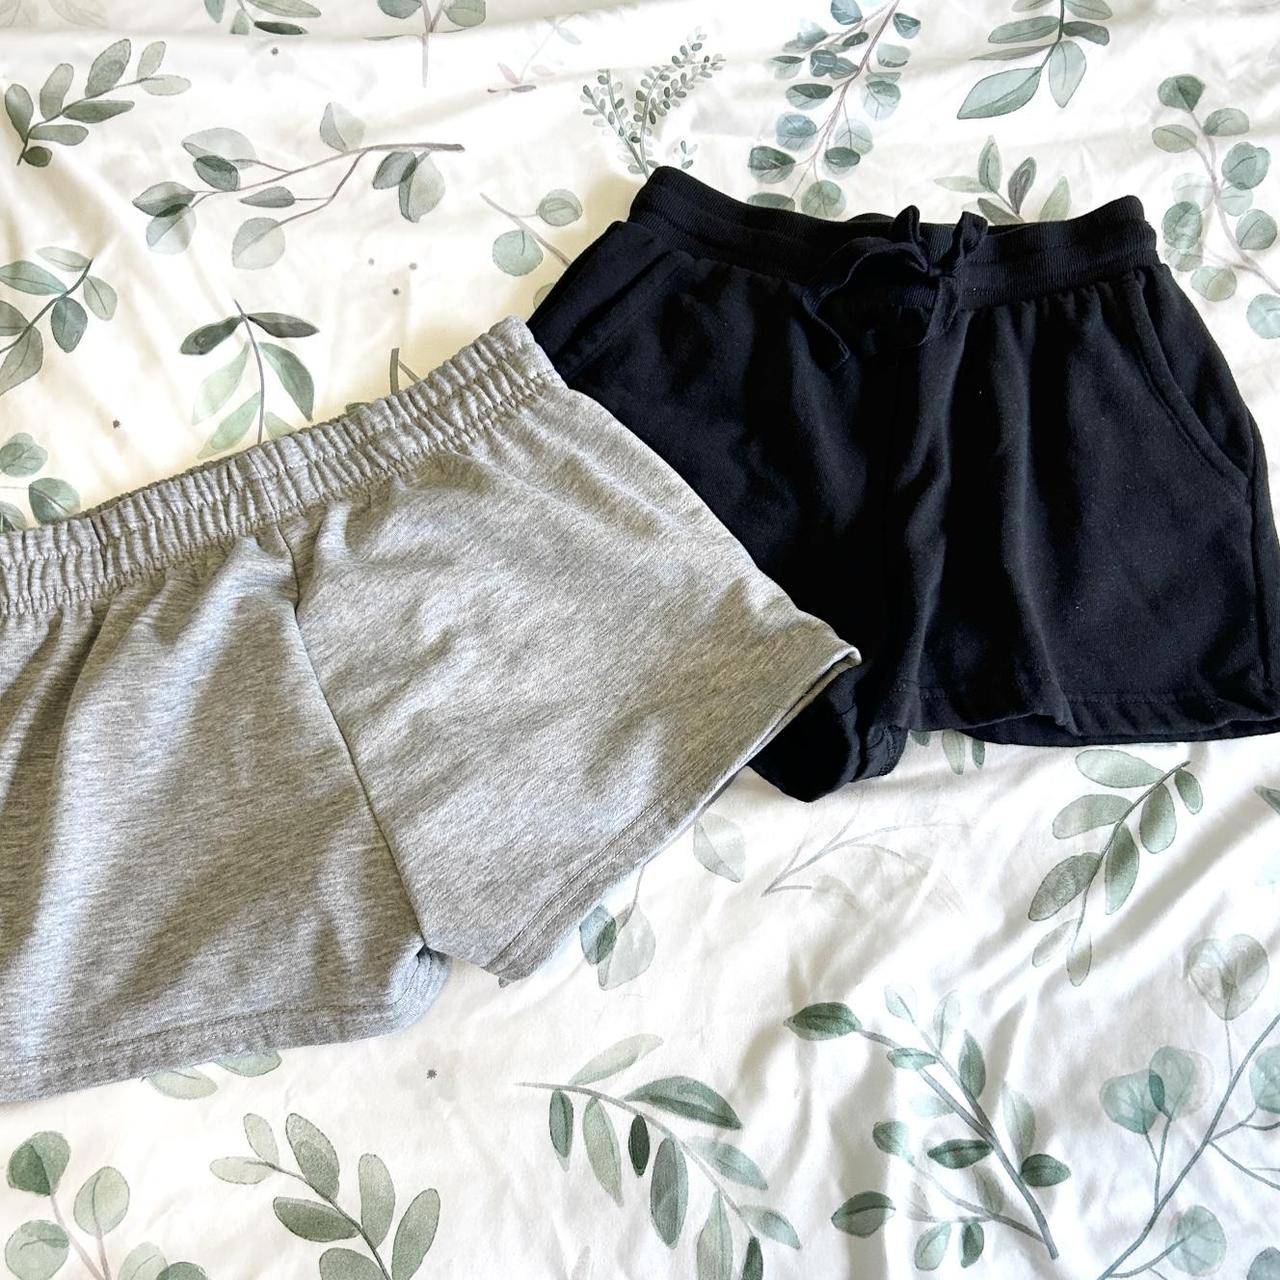 bundle of 2 pj shorts- one black tie colsie shorts